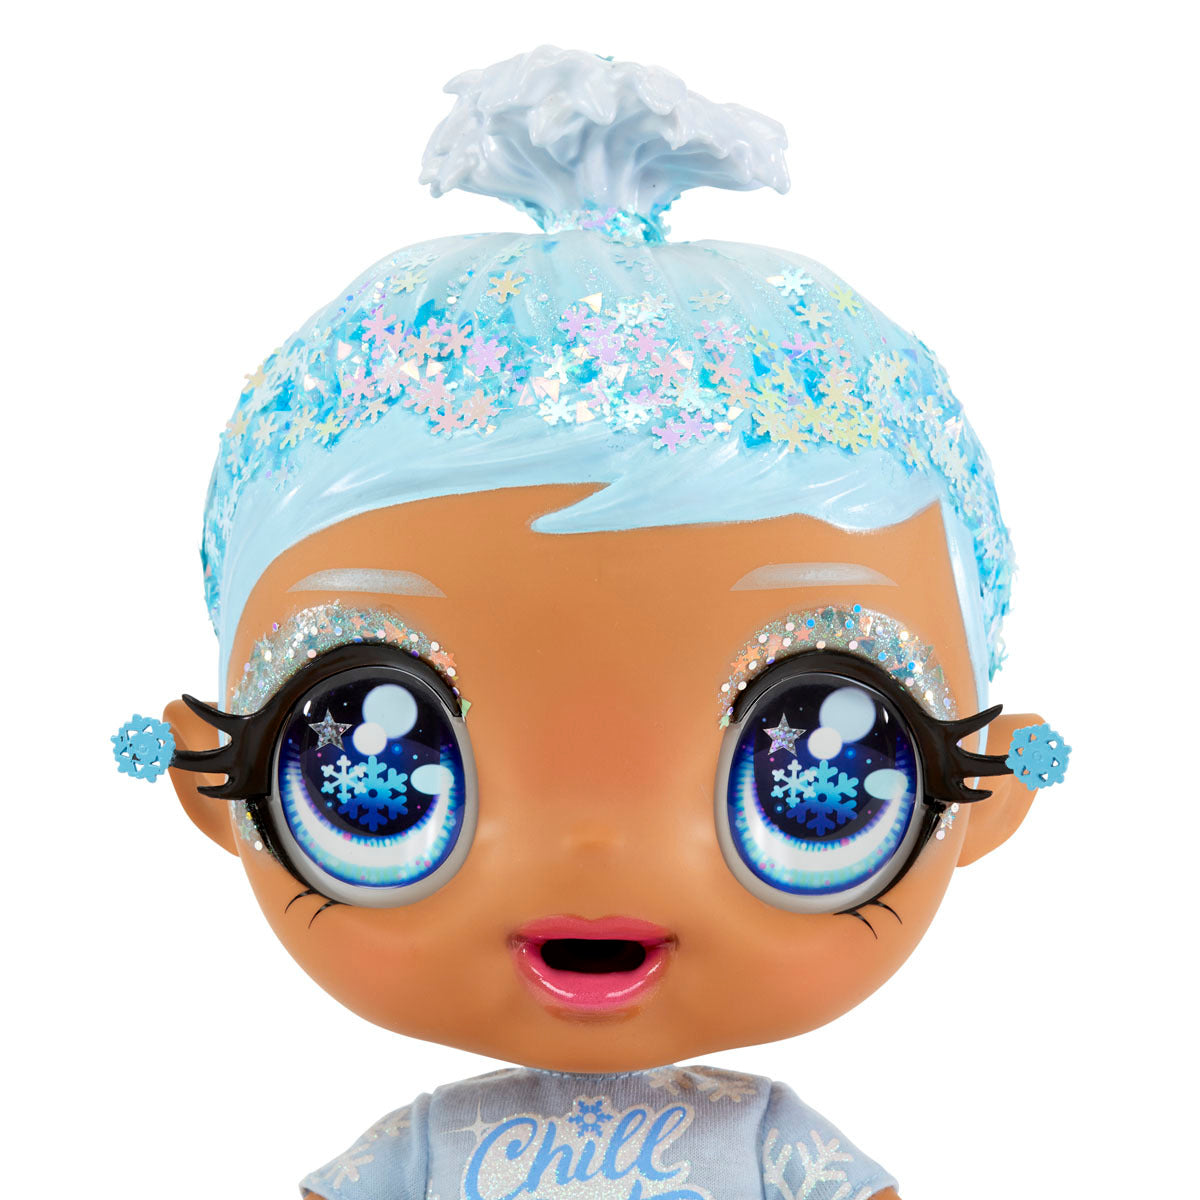 Glitter Babyz - January Snowflake Baby Doll